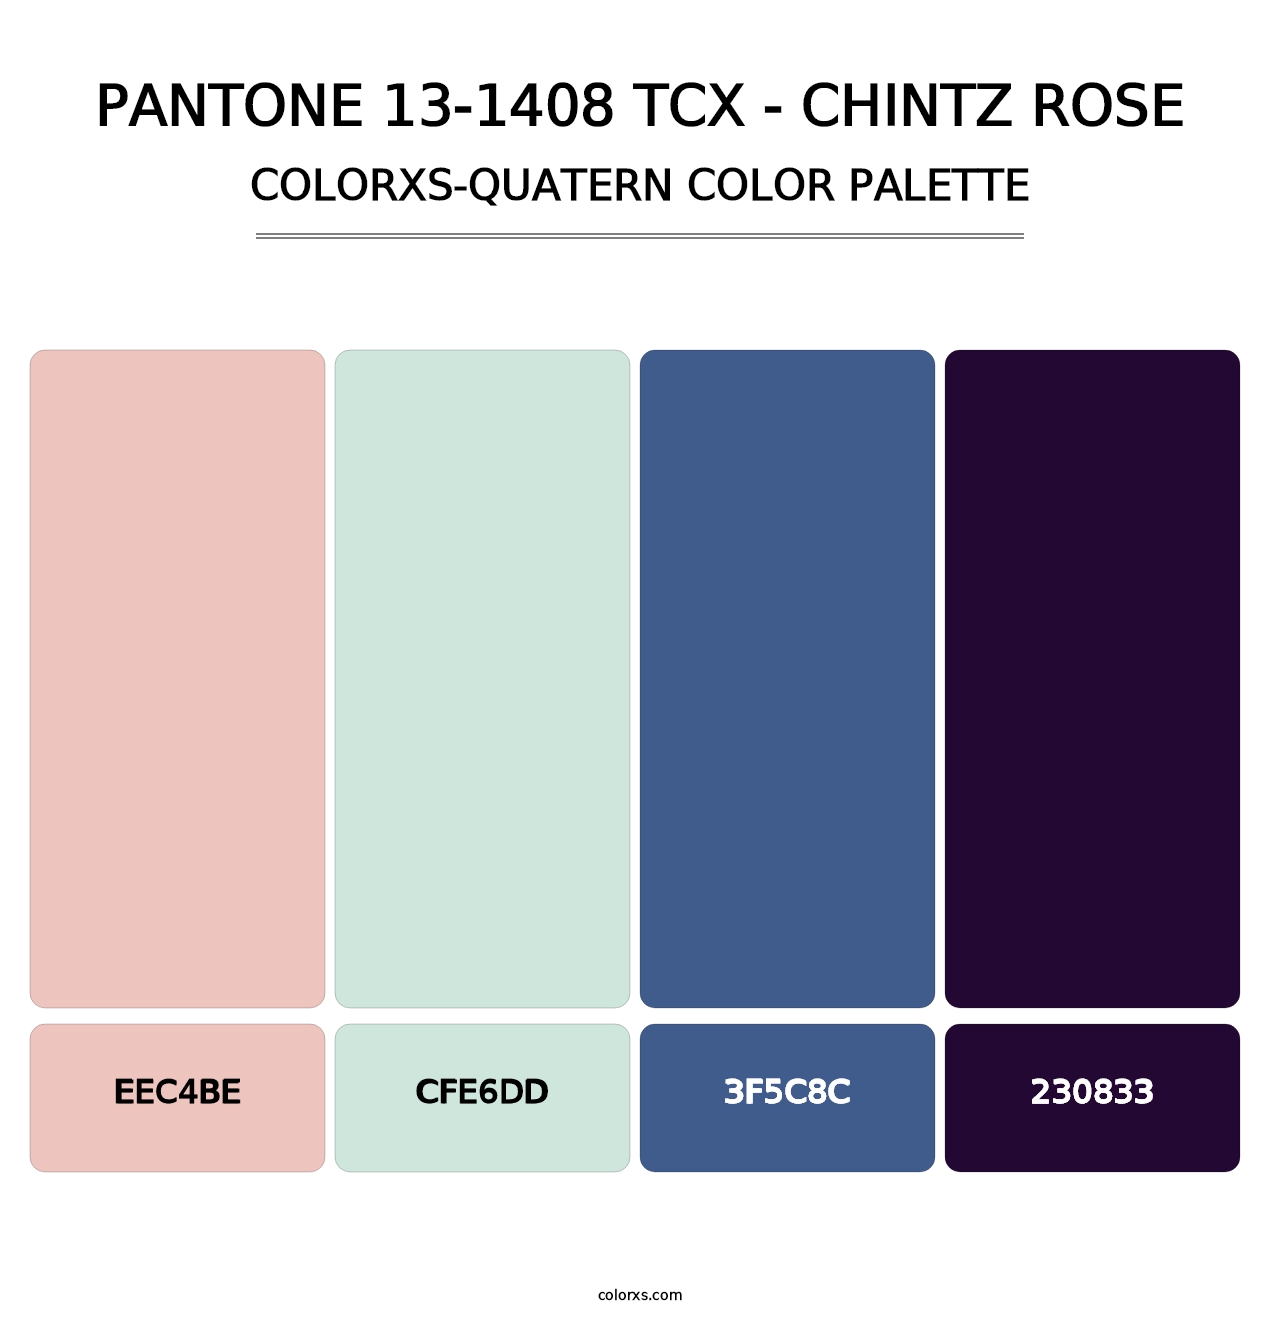 PANTONE 13-1408 TCX - Chintz Rose - Colorxs Quatern Palette